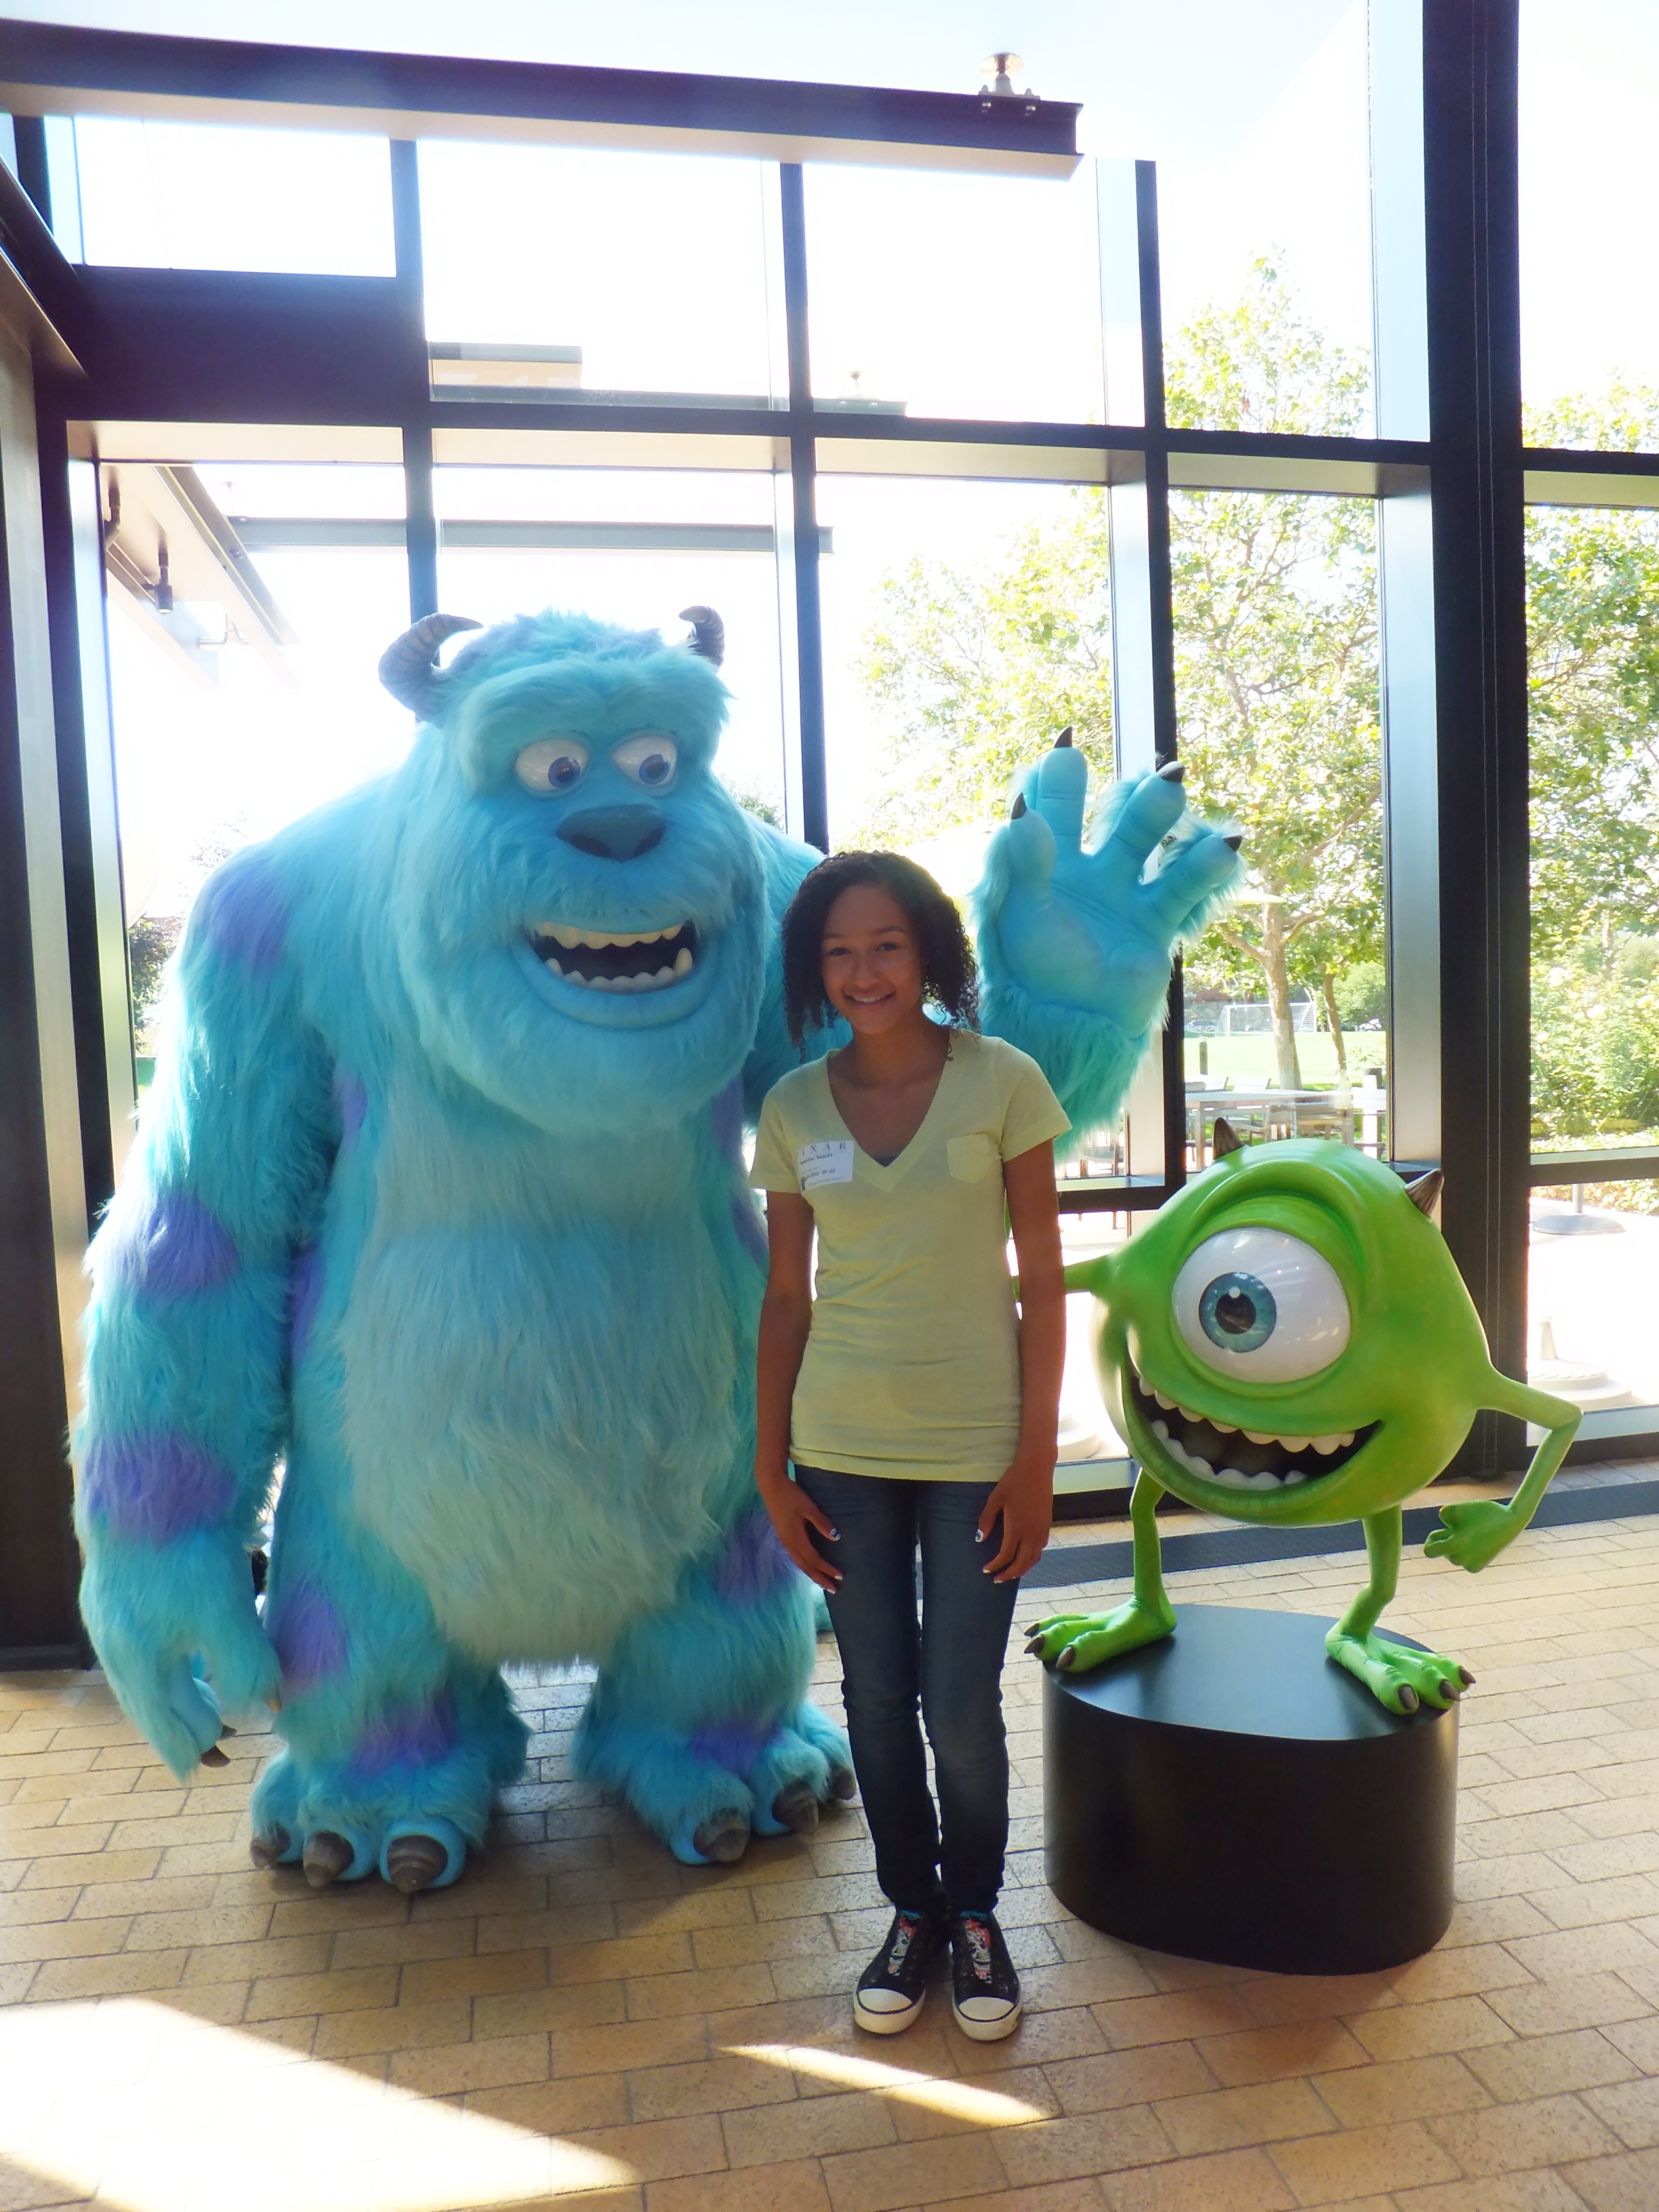 Samantha at Pixar Studios recording Monsters University